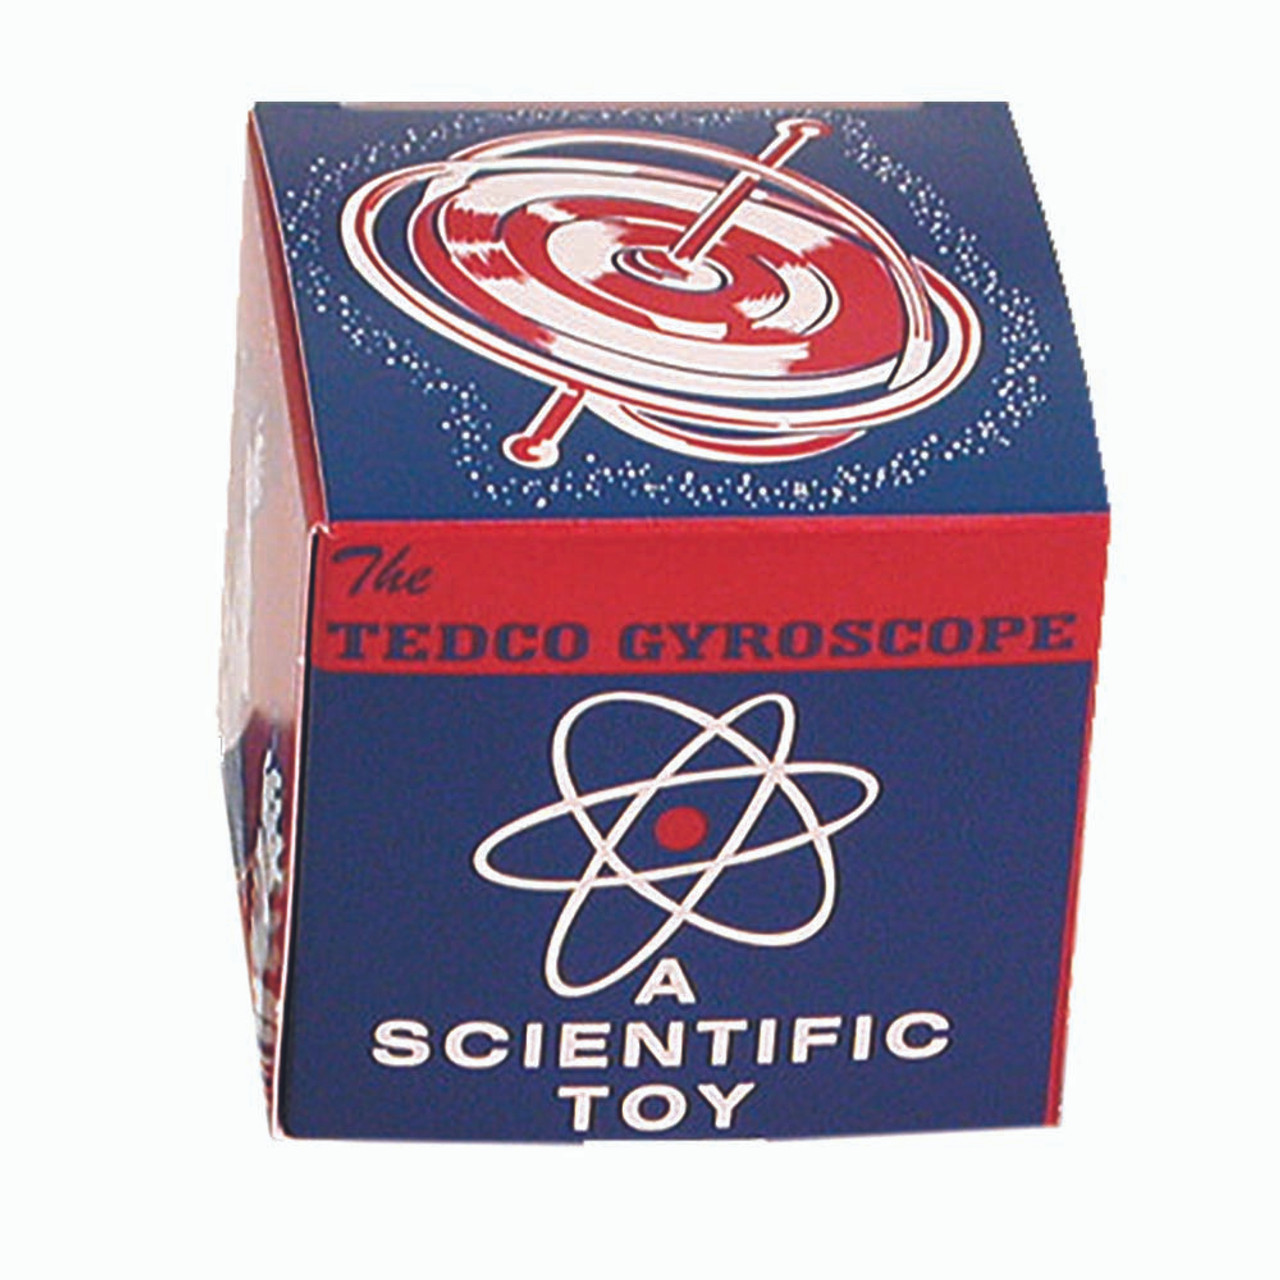 TEDCO Original Gyroscope Made in The USA! 